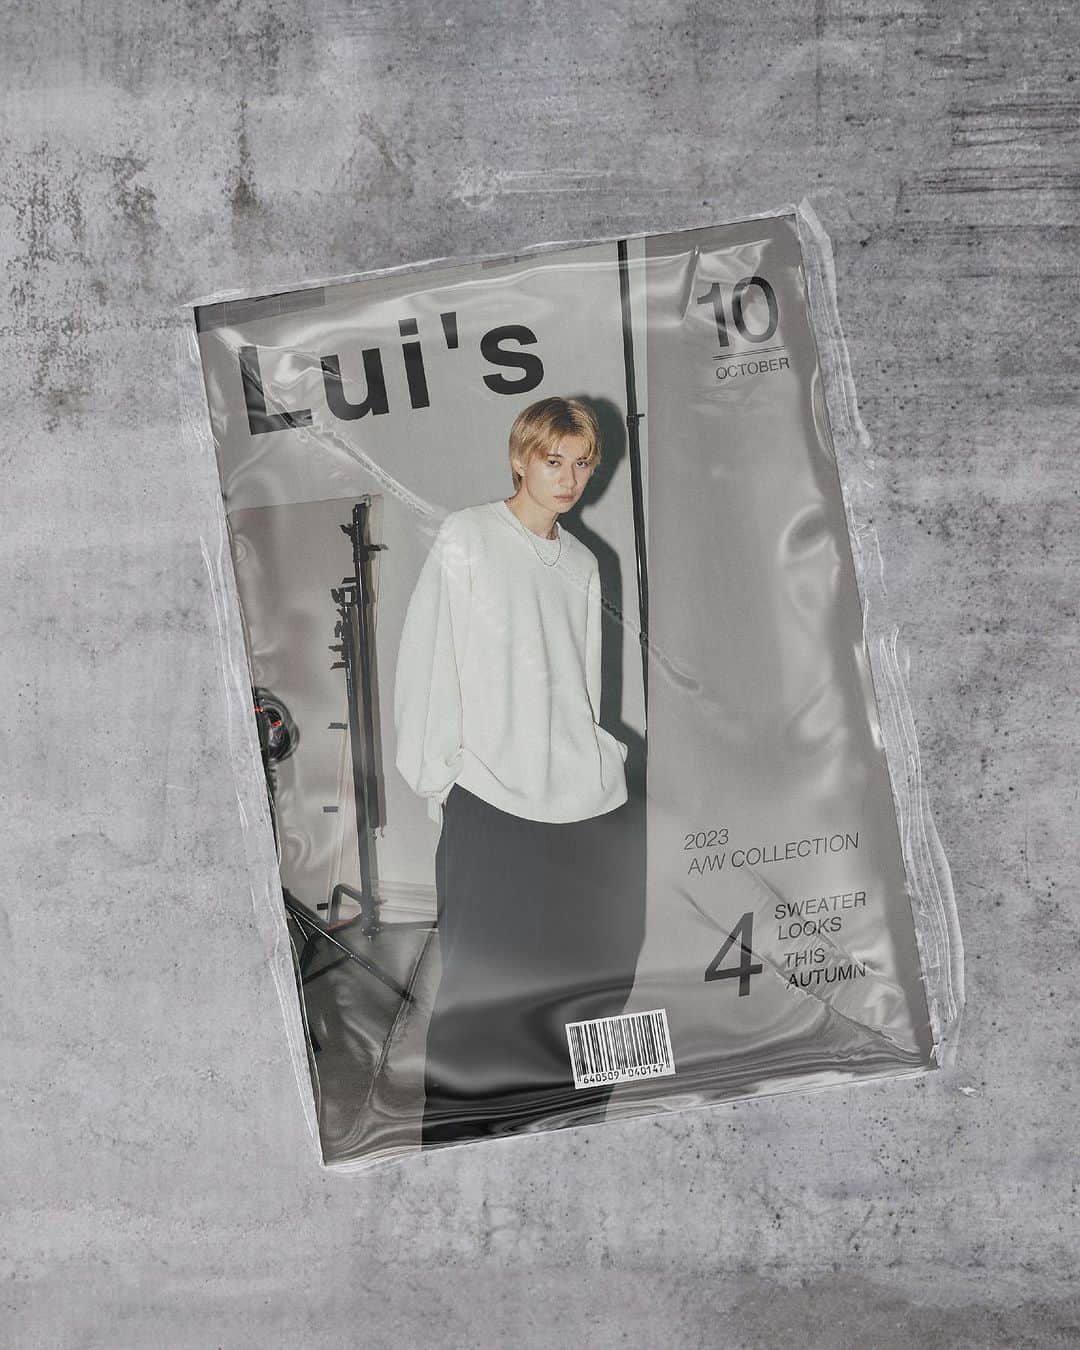 Lui's Lui's official instagramのインスタグラム